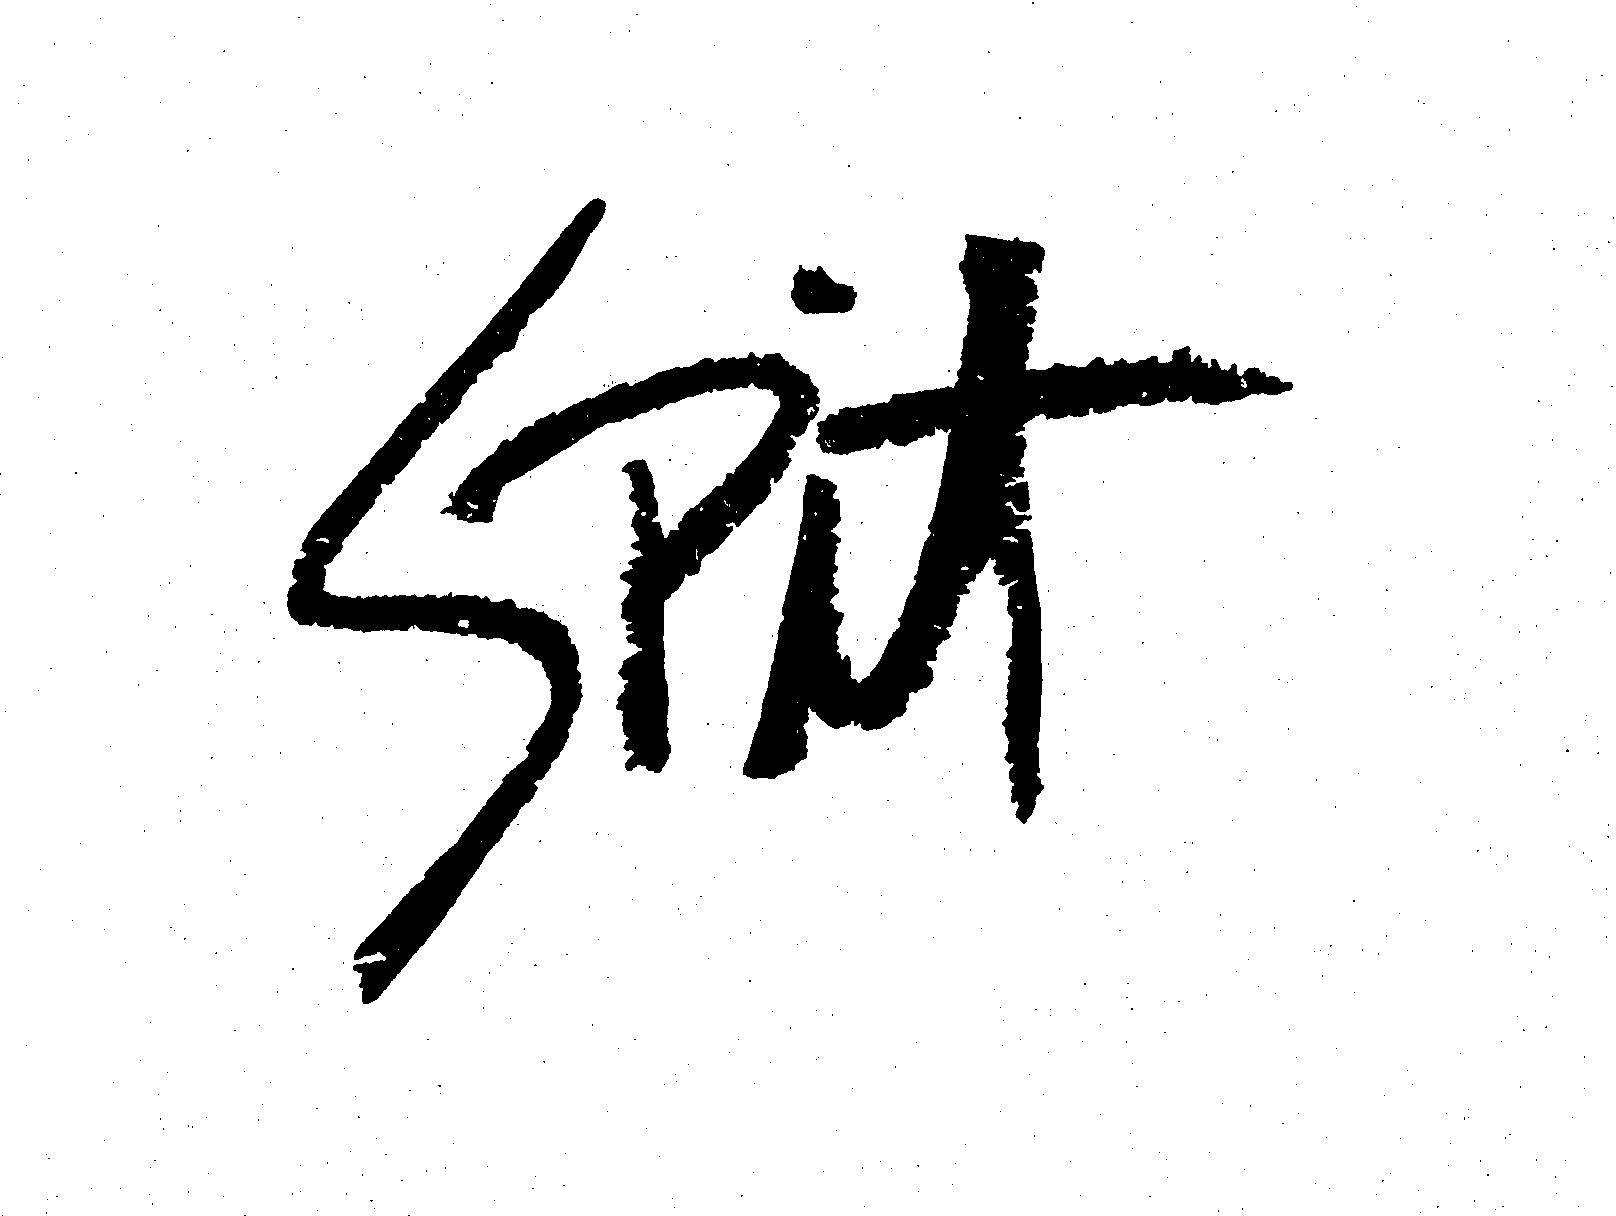 Trademark Logo SPIT